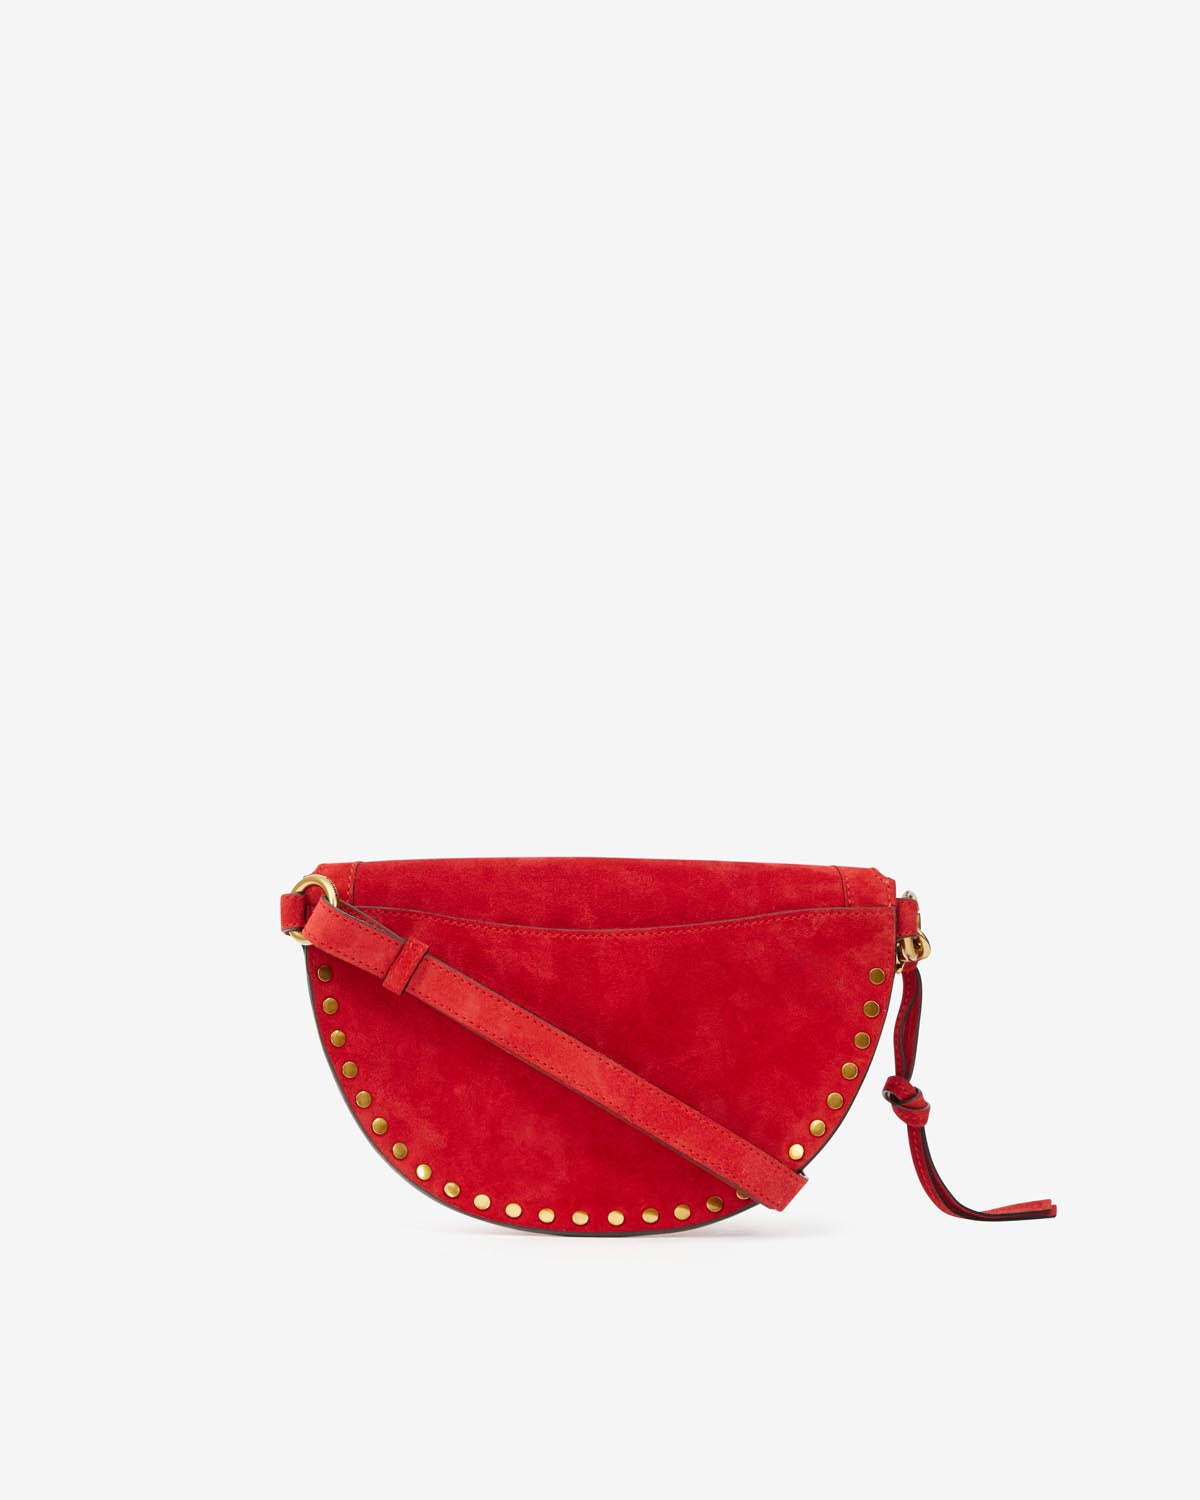 Skano belt bag Woman Scarlet red 2